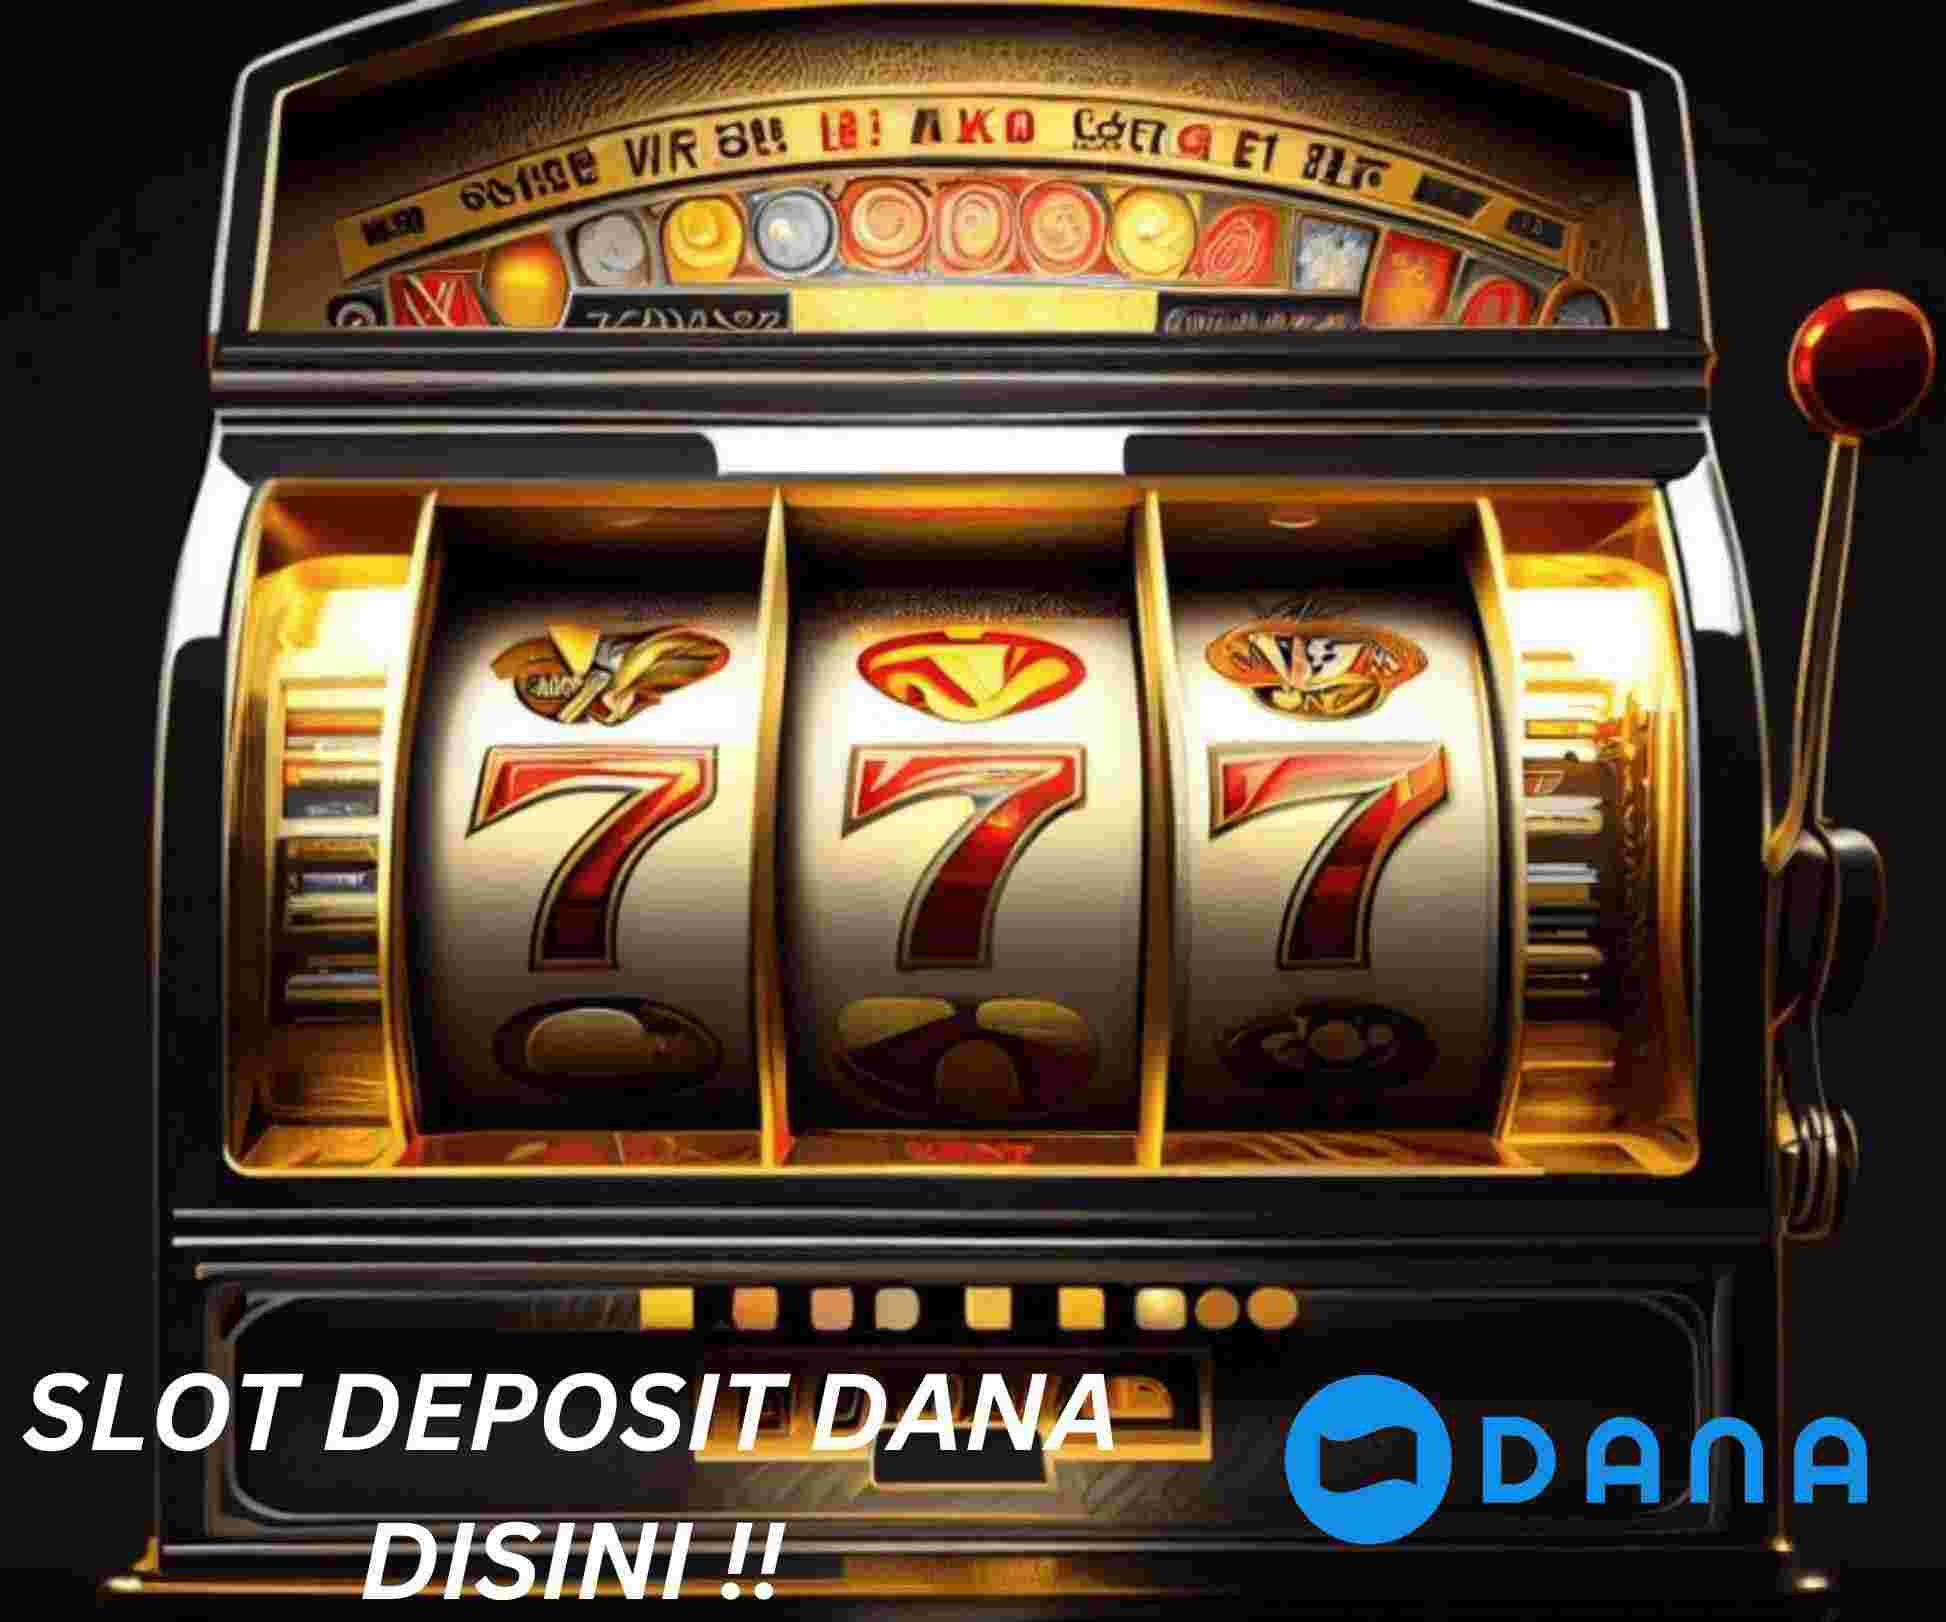 Slot Dana Deposit Slot Games Use Complete Funds